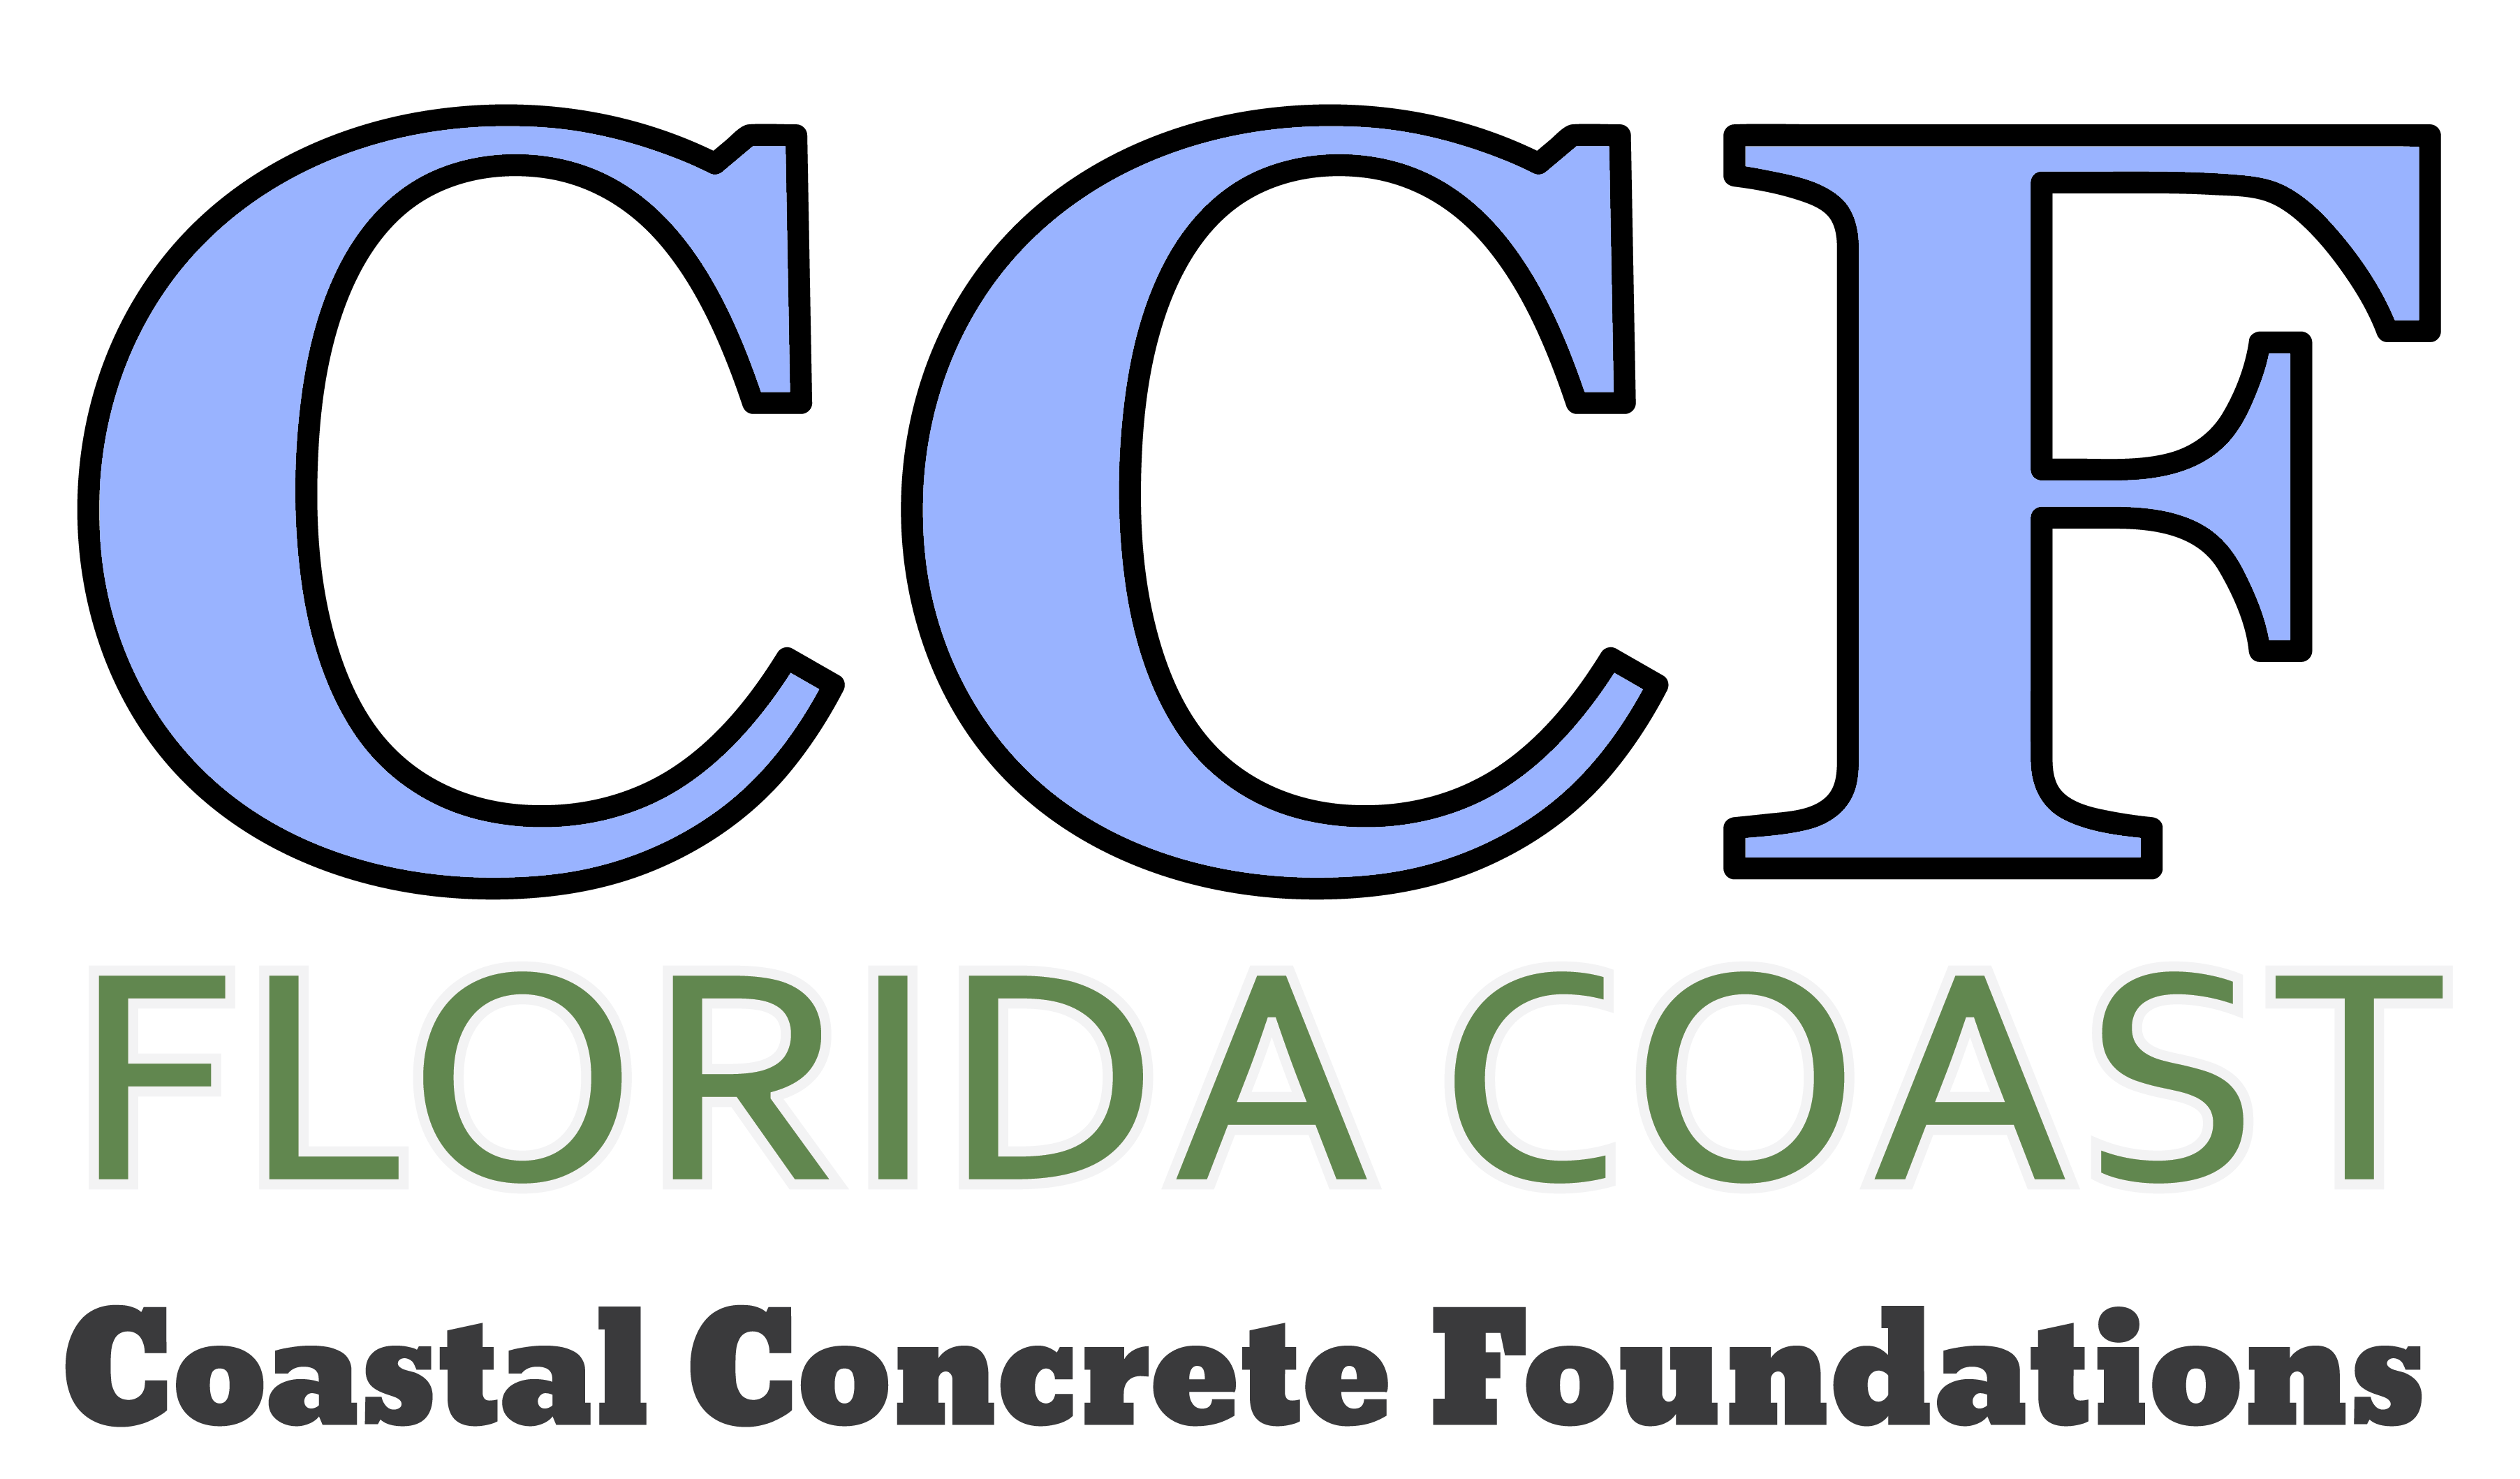 CCF Florida Coastal Concrete Foundations